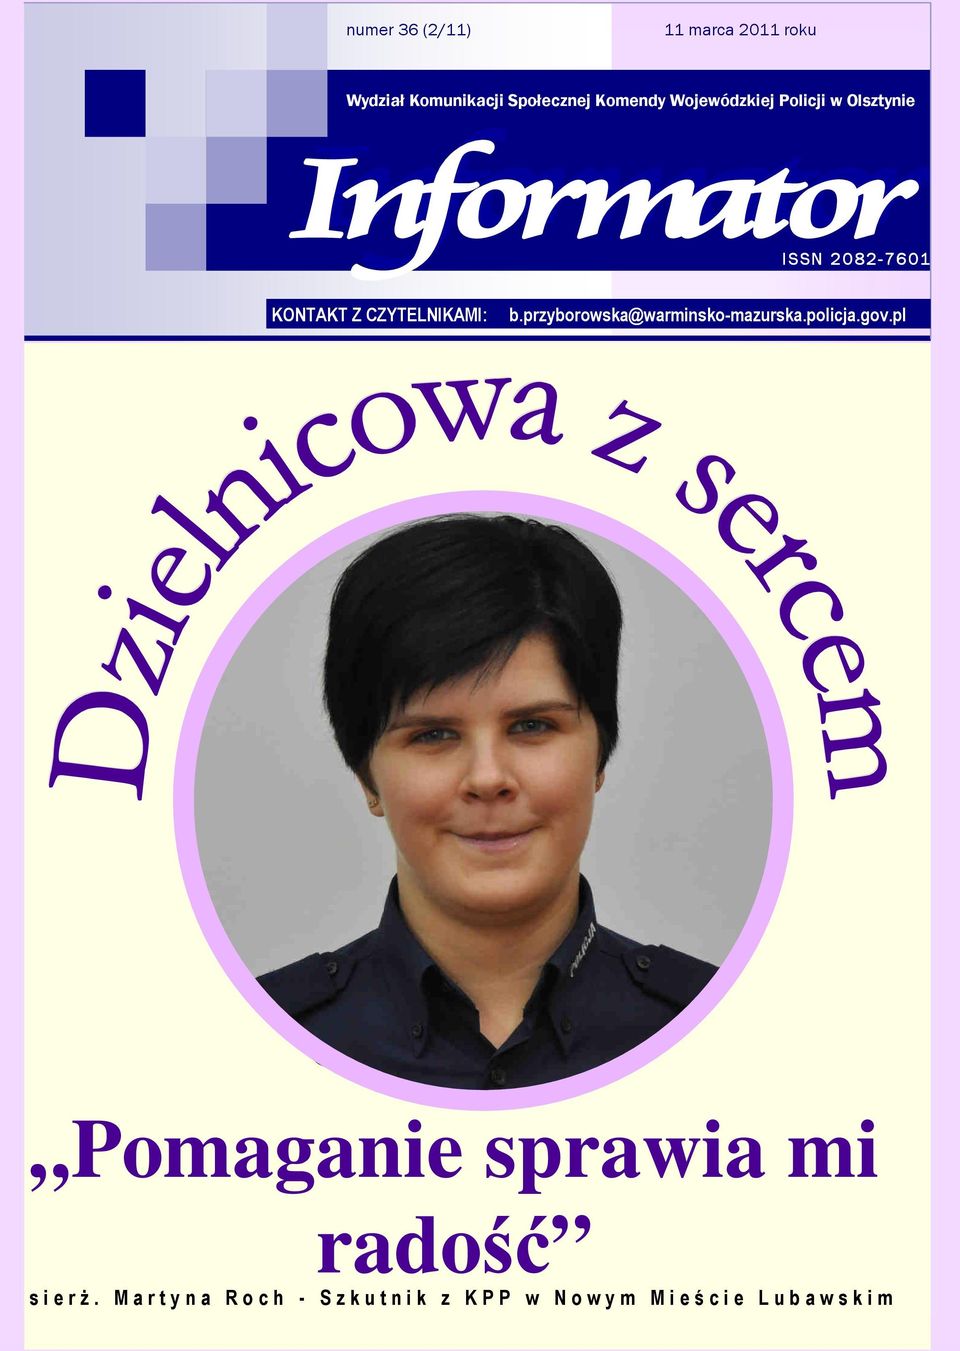 przyborowska@warminsko-mazurska.policja.gov.